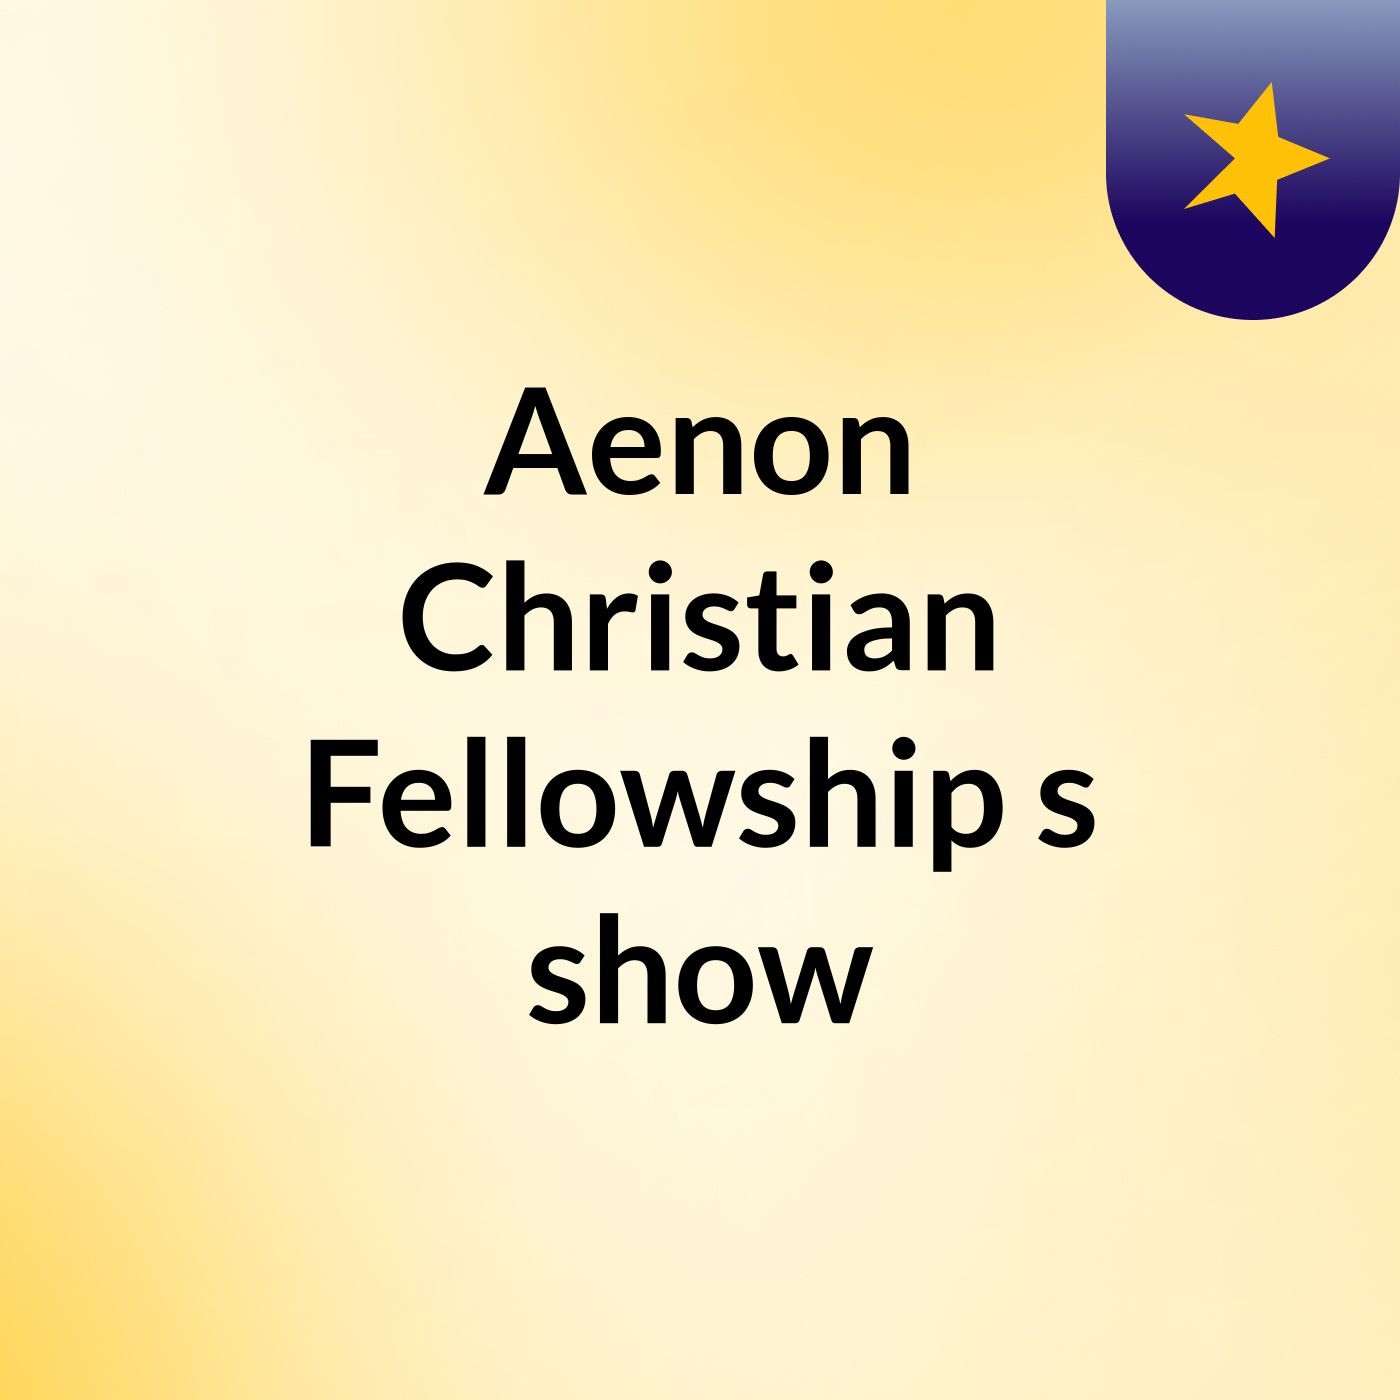 Aenon Christian Fellowship's show